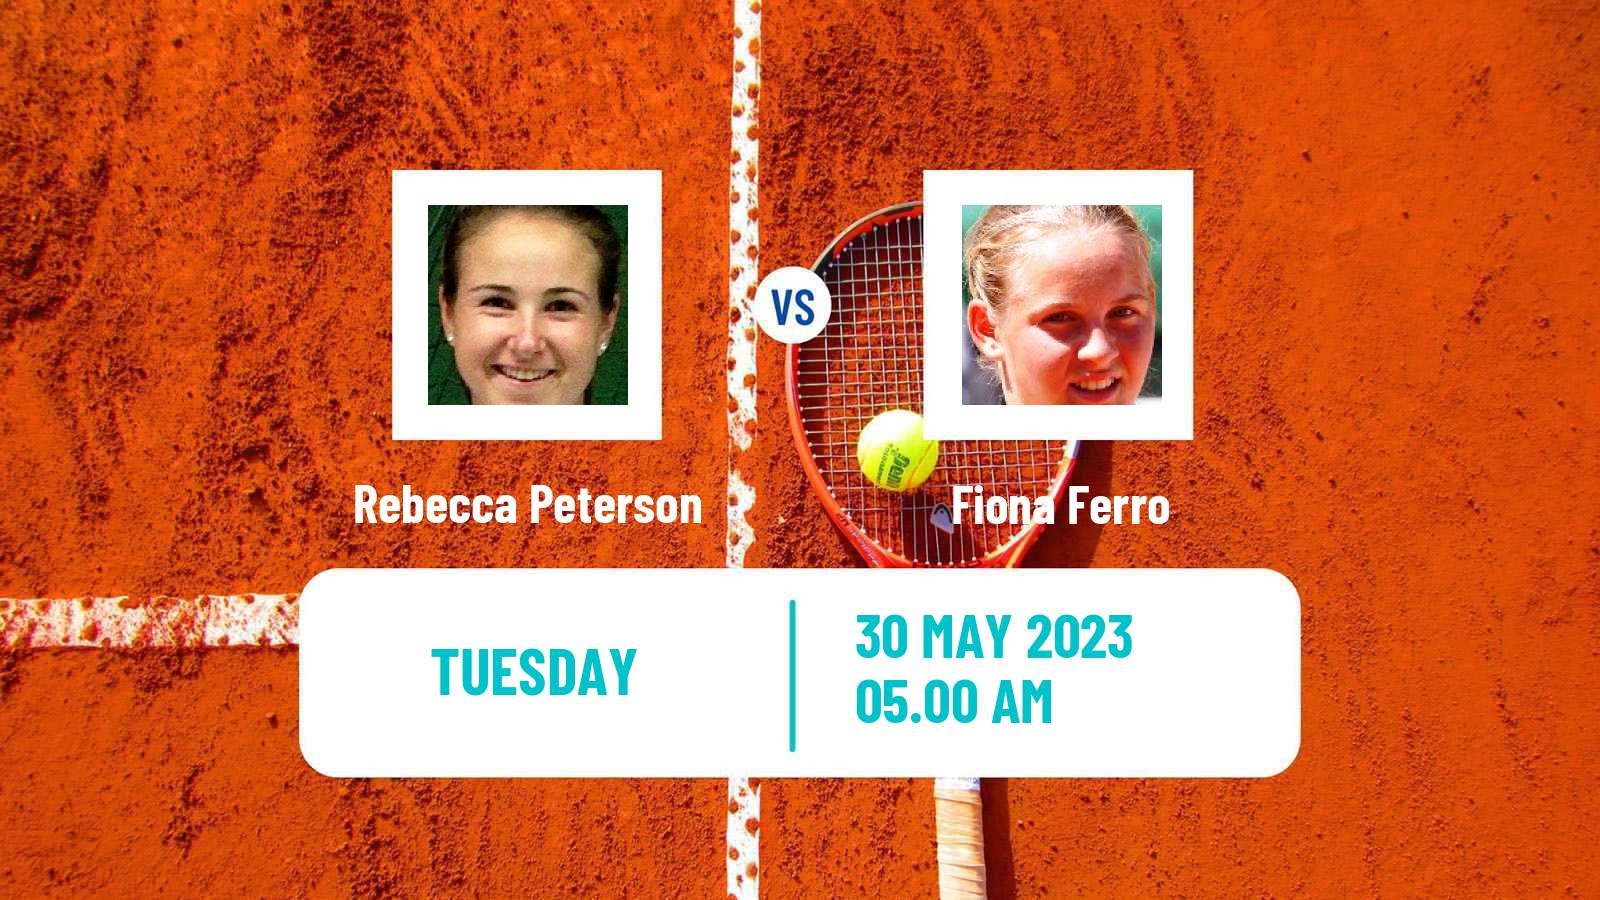 Tennis WTA Roland Garros Rebecca Peterson - Fiona Ferro